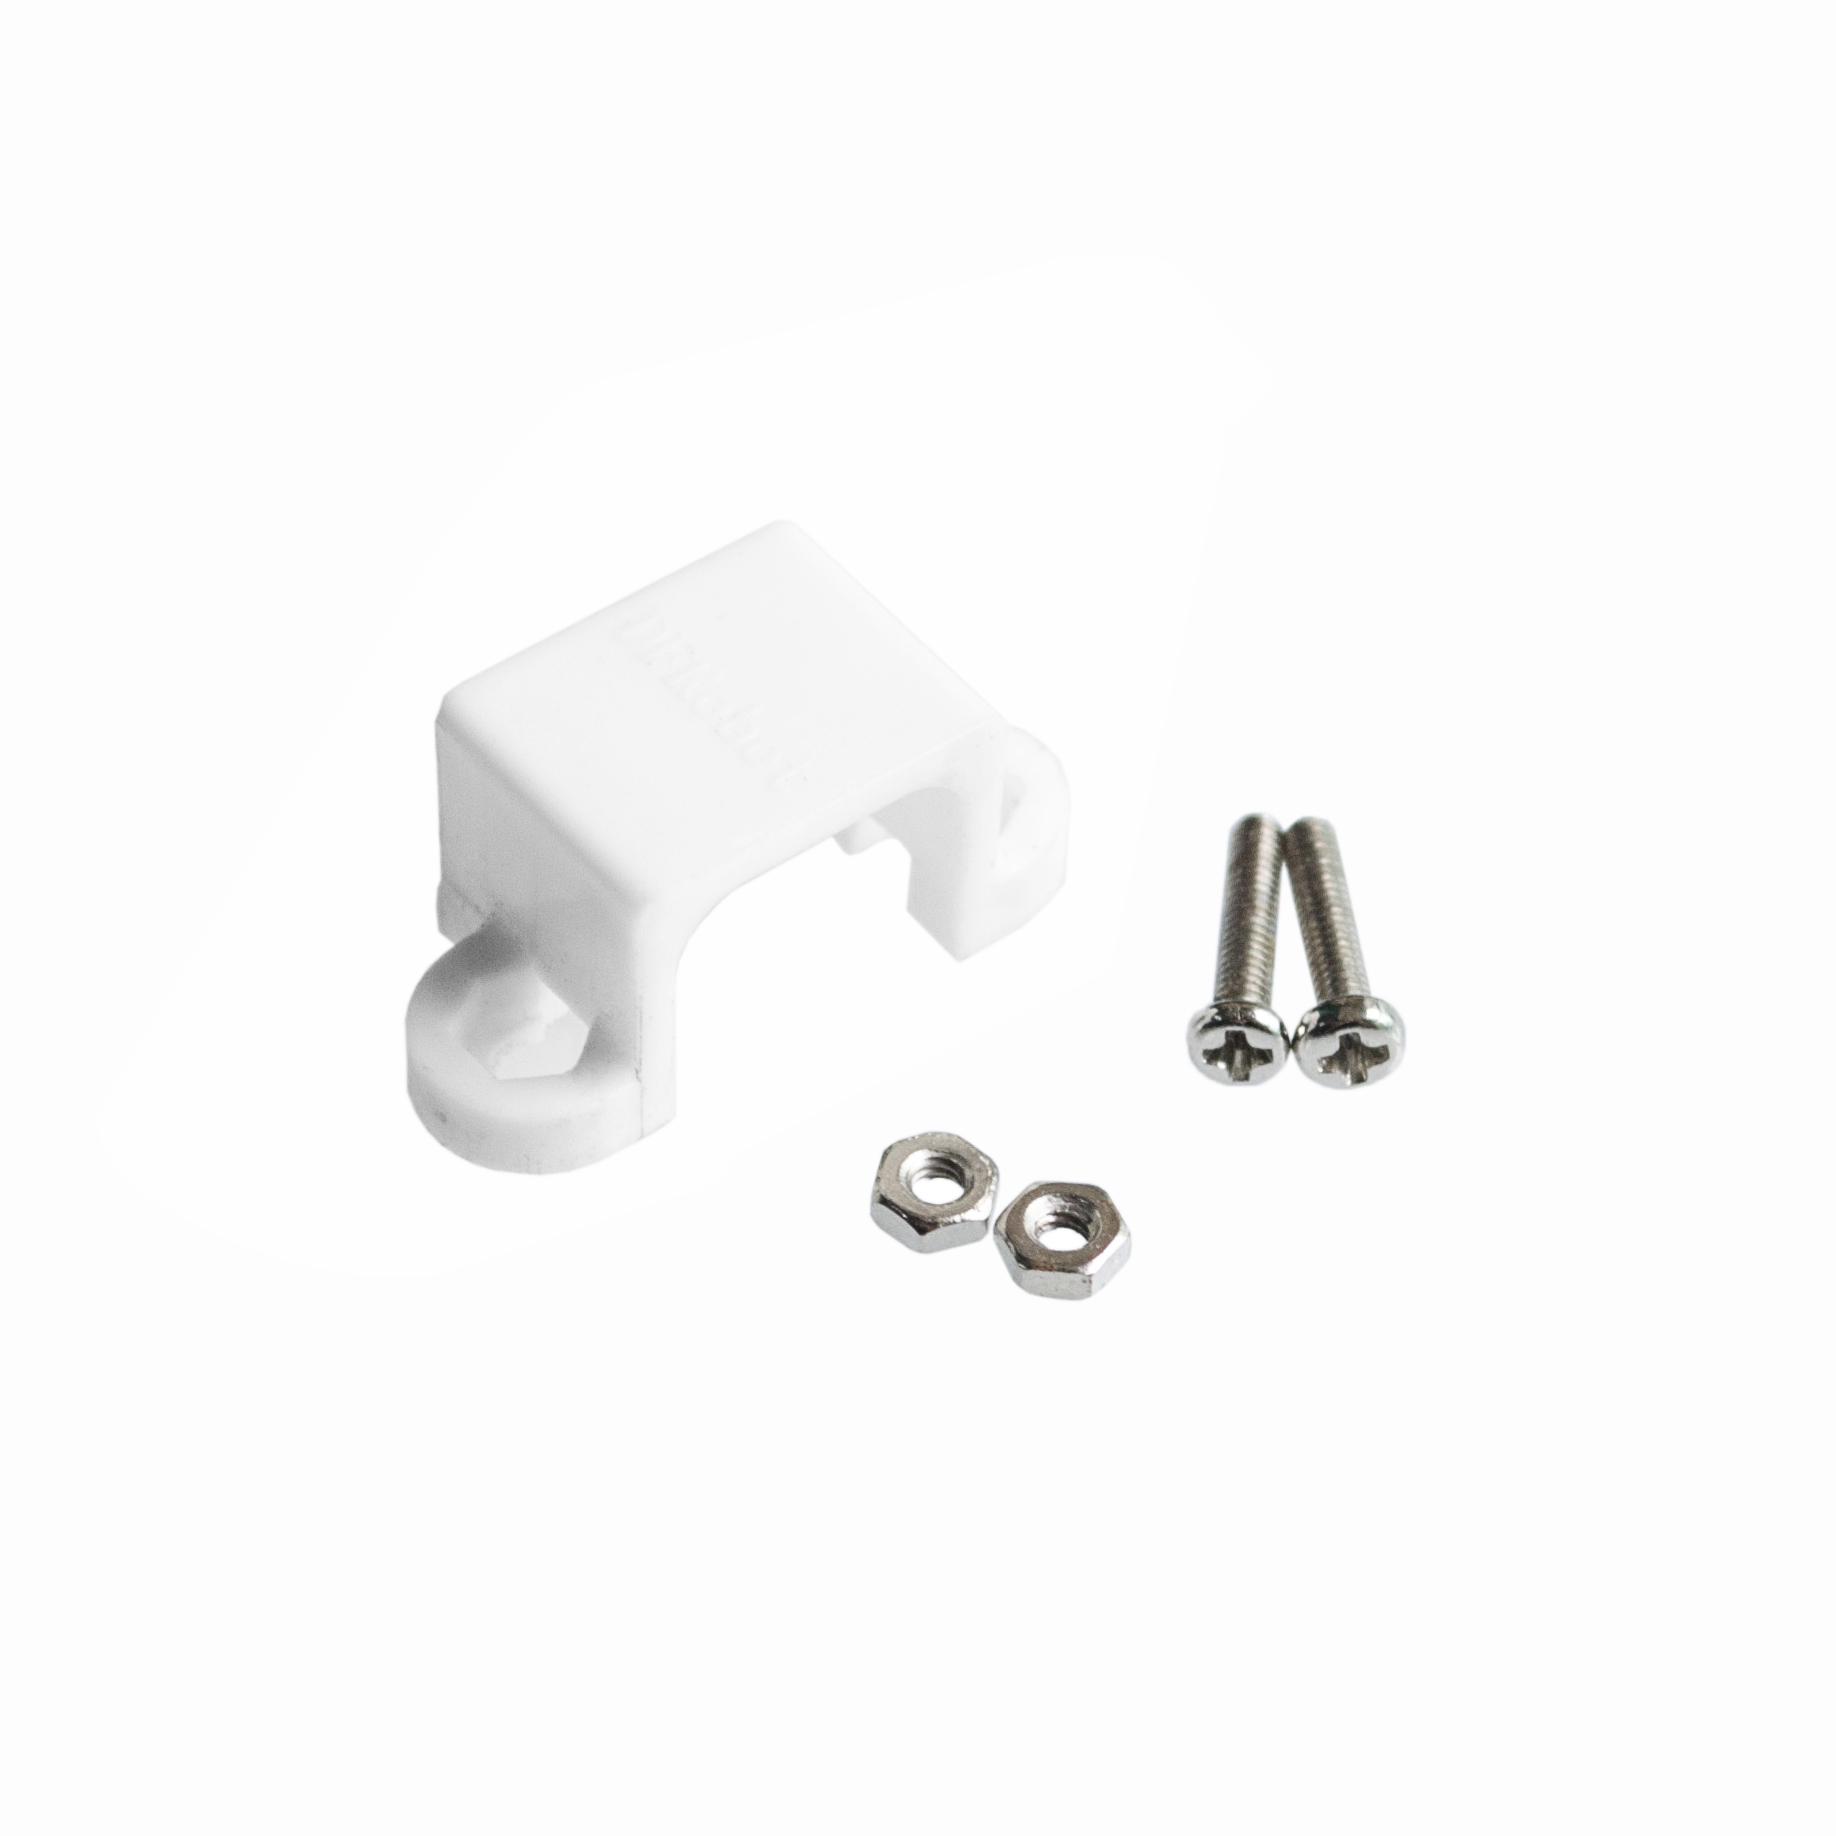 100PCS/LOT White Plastic Motor Holder for N20/N30 Micro DC Motor DIY Model Parts